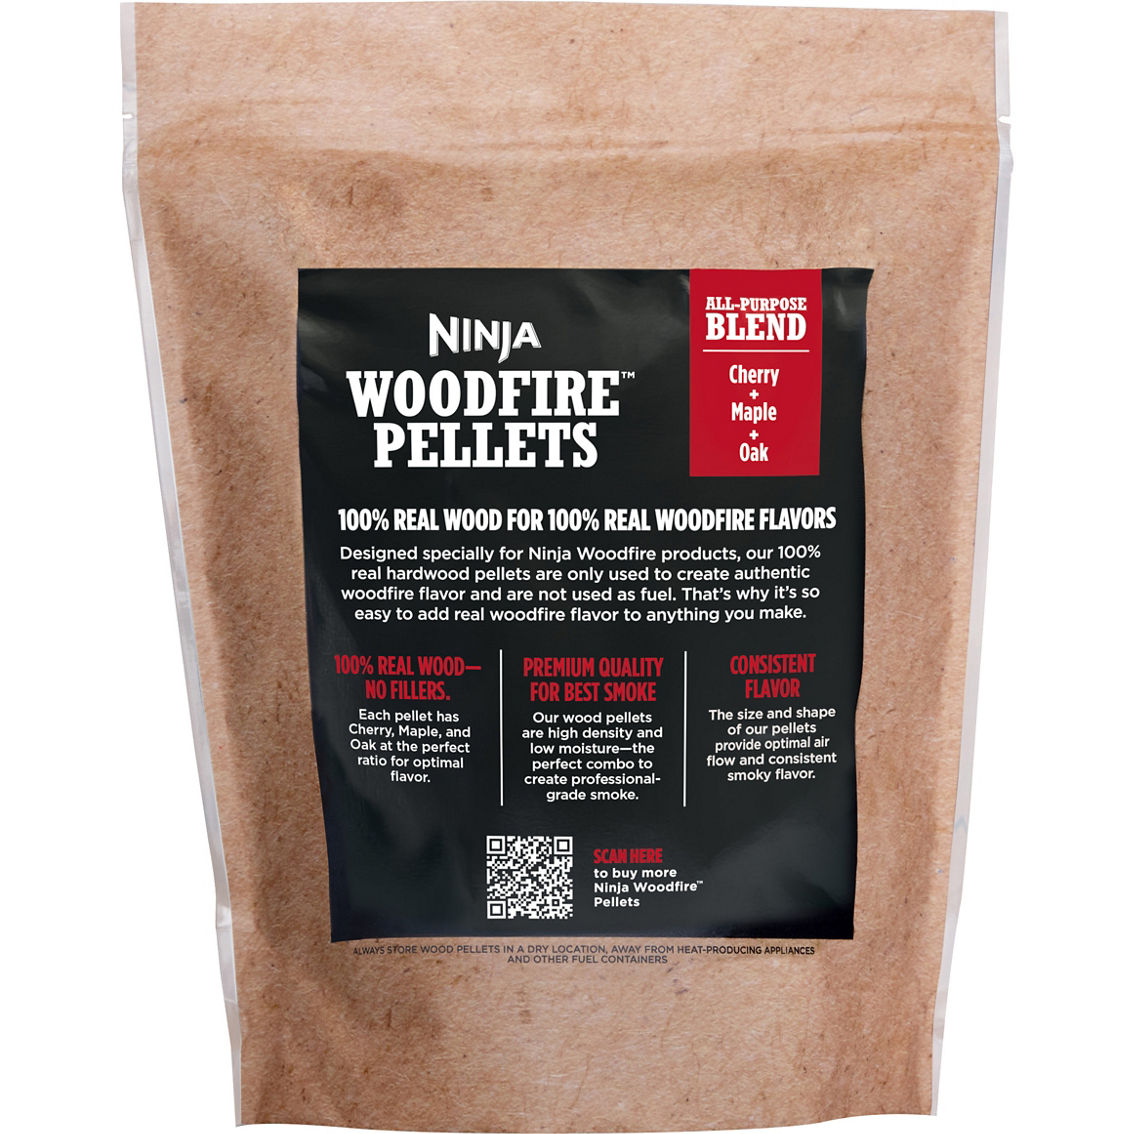 Ninja Woodfire Flavour 2-lb Wood Pellets in the Grill Pellets